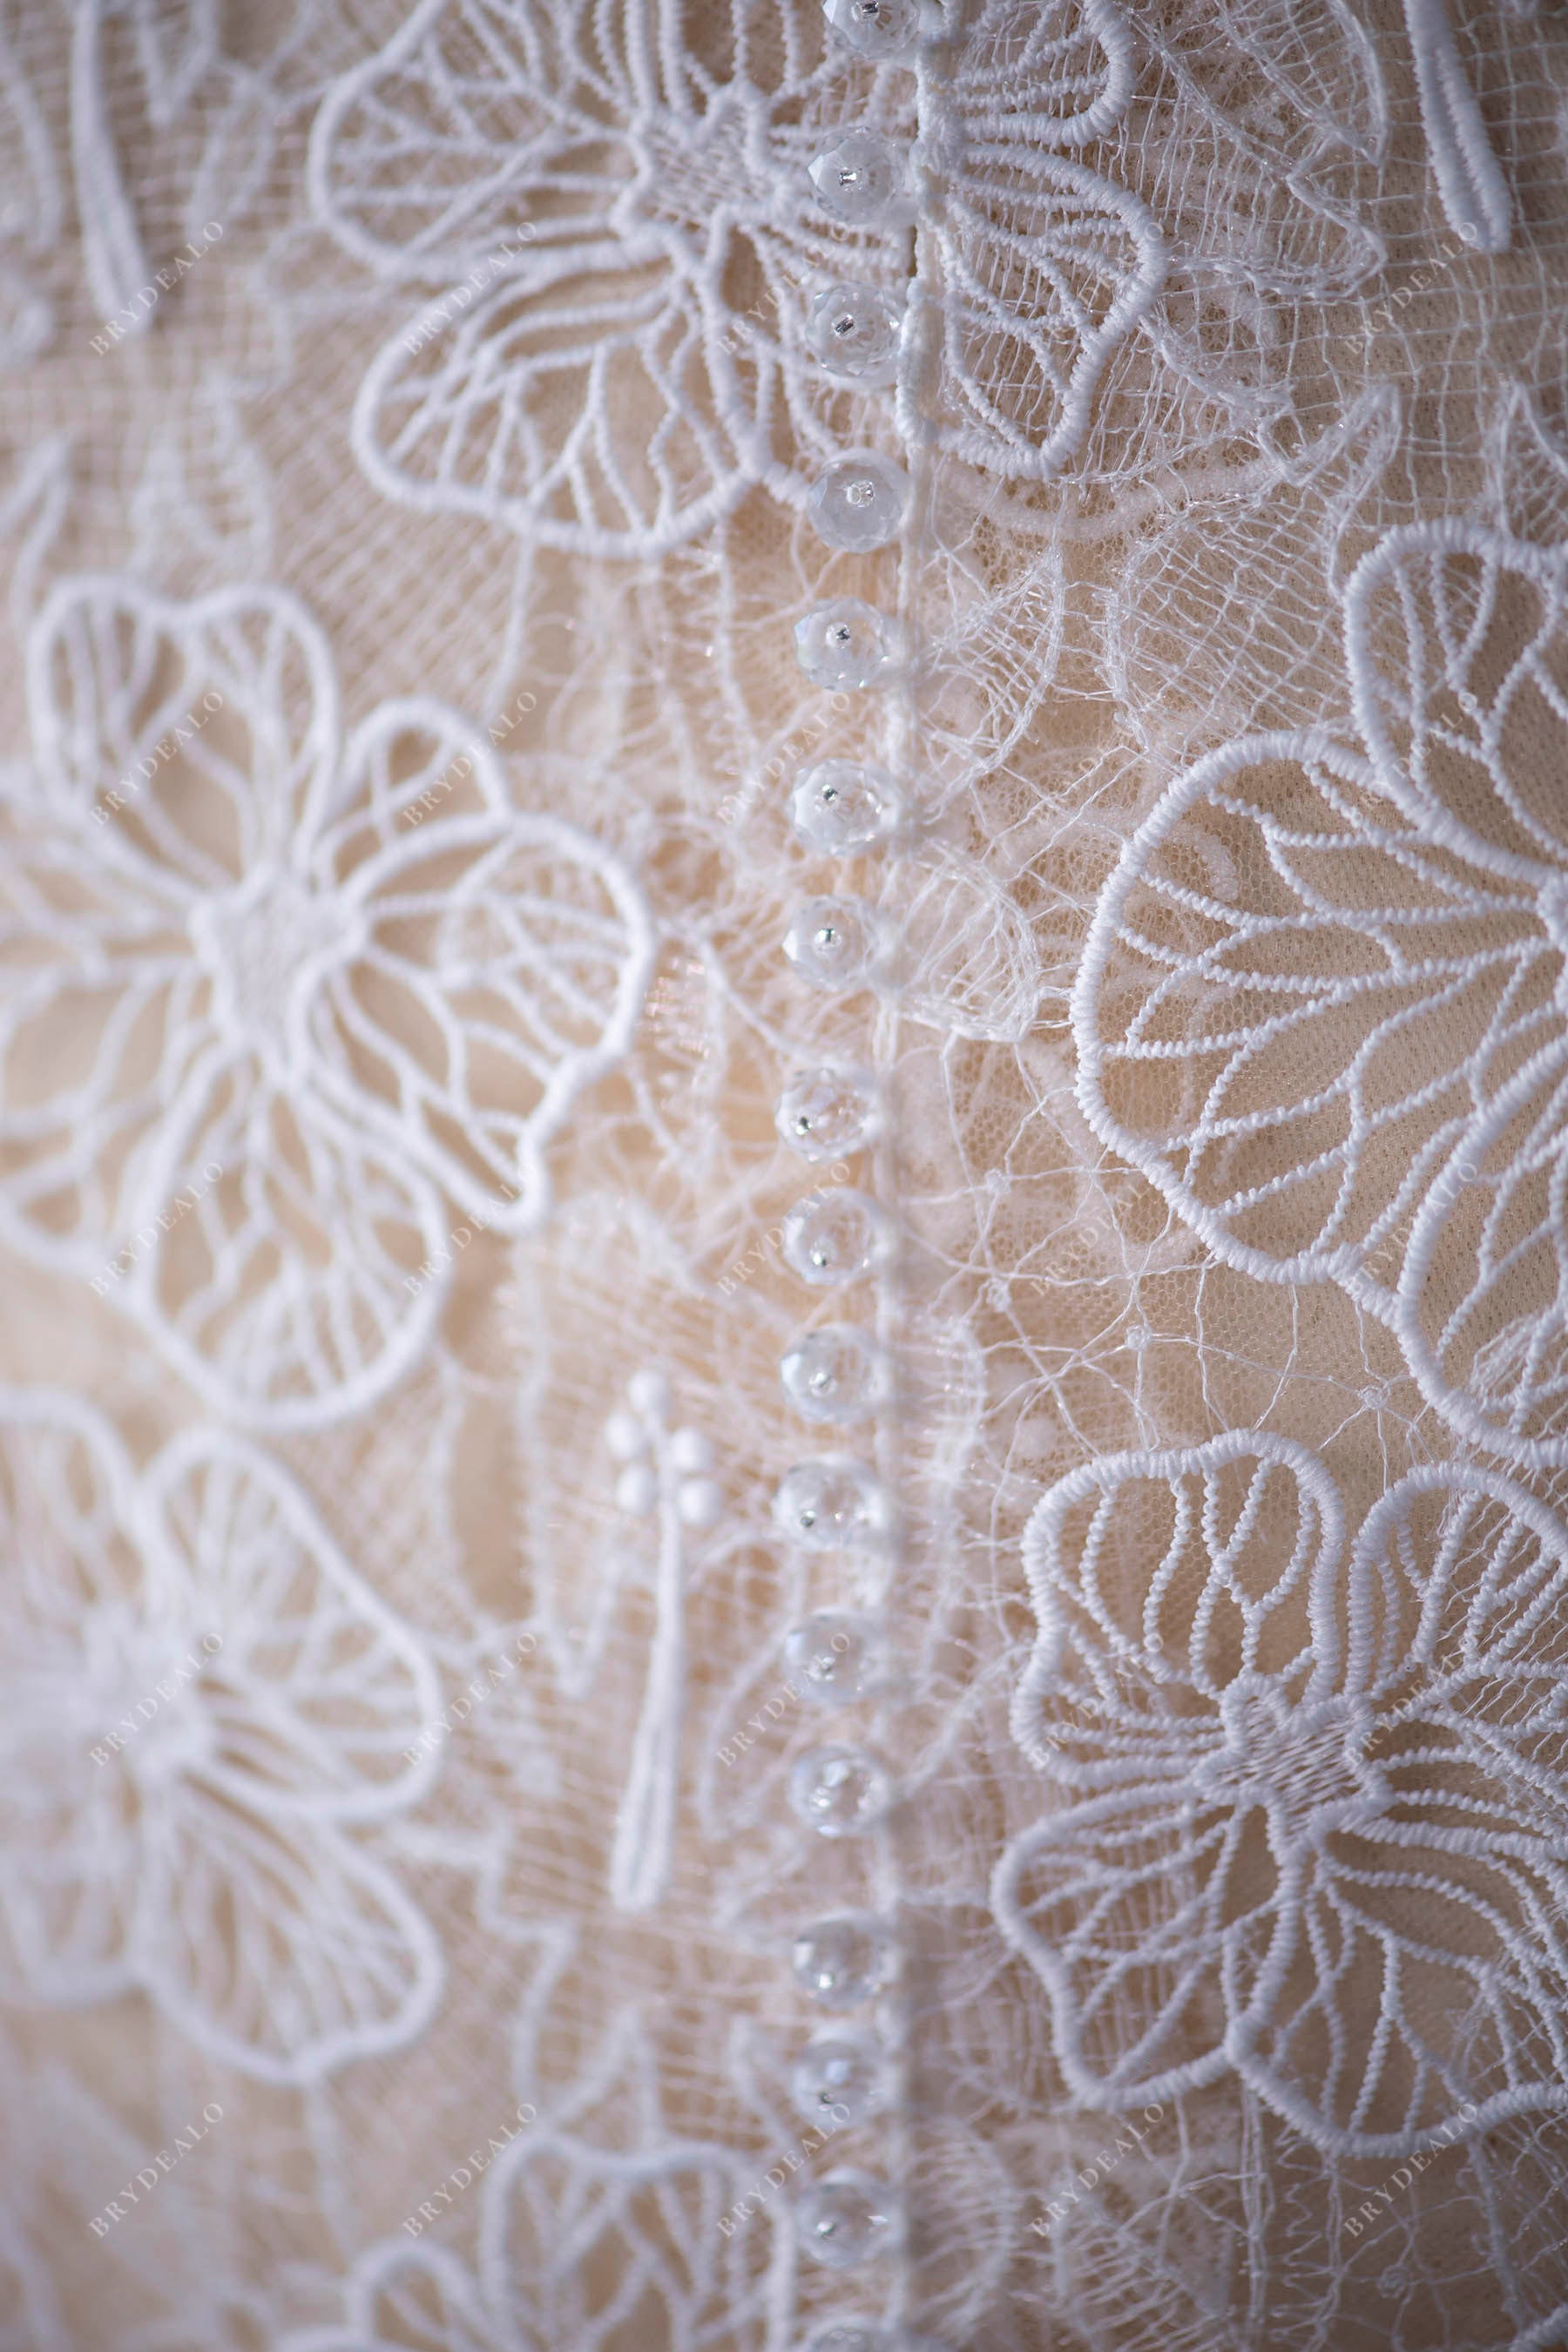 floral lace bridal dress buttons up back